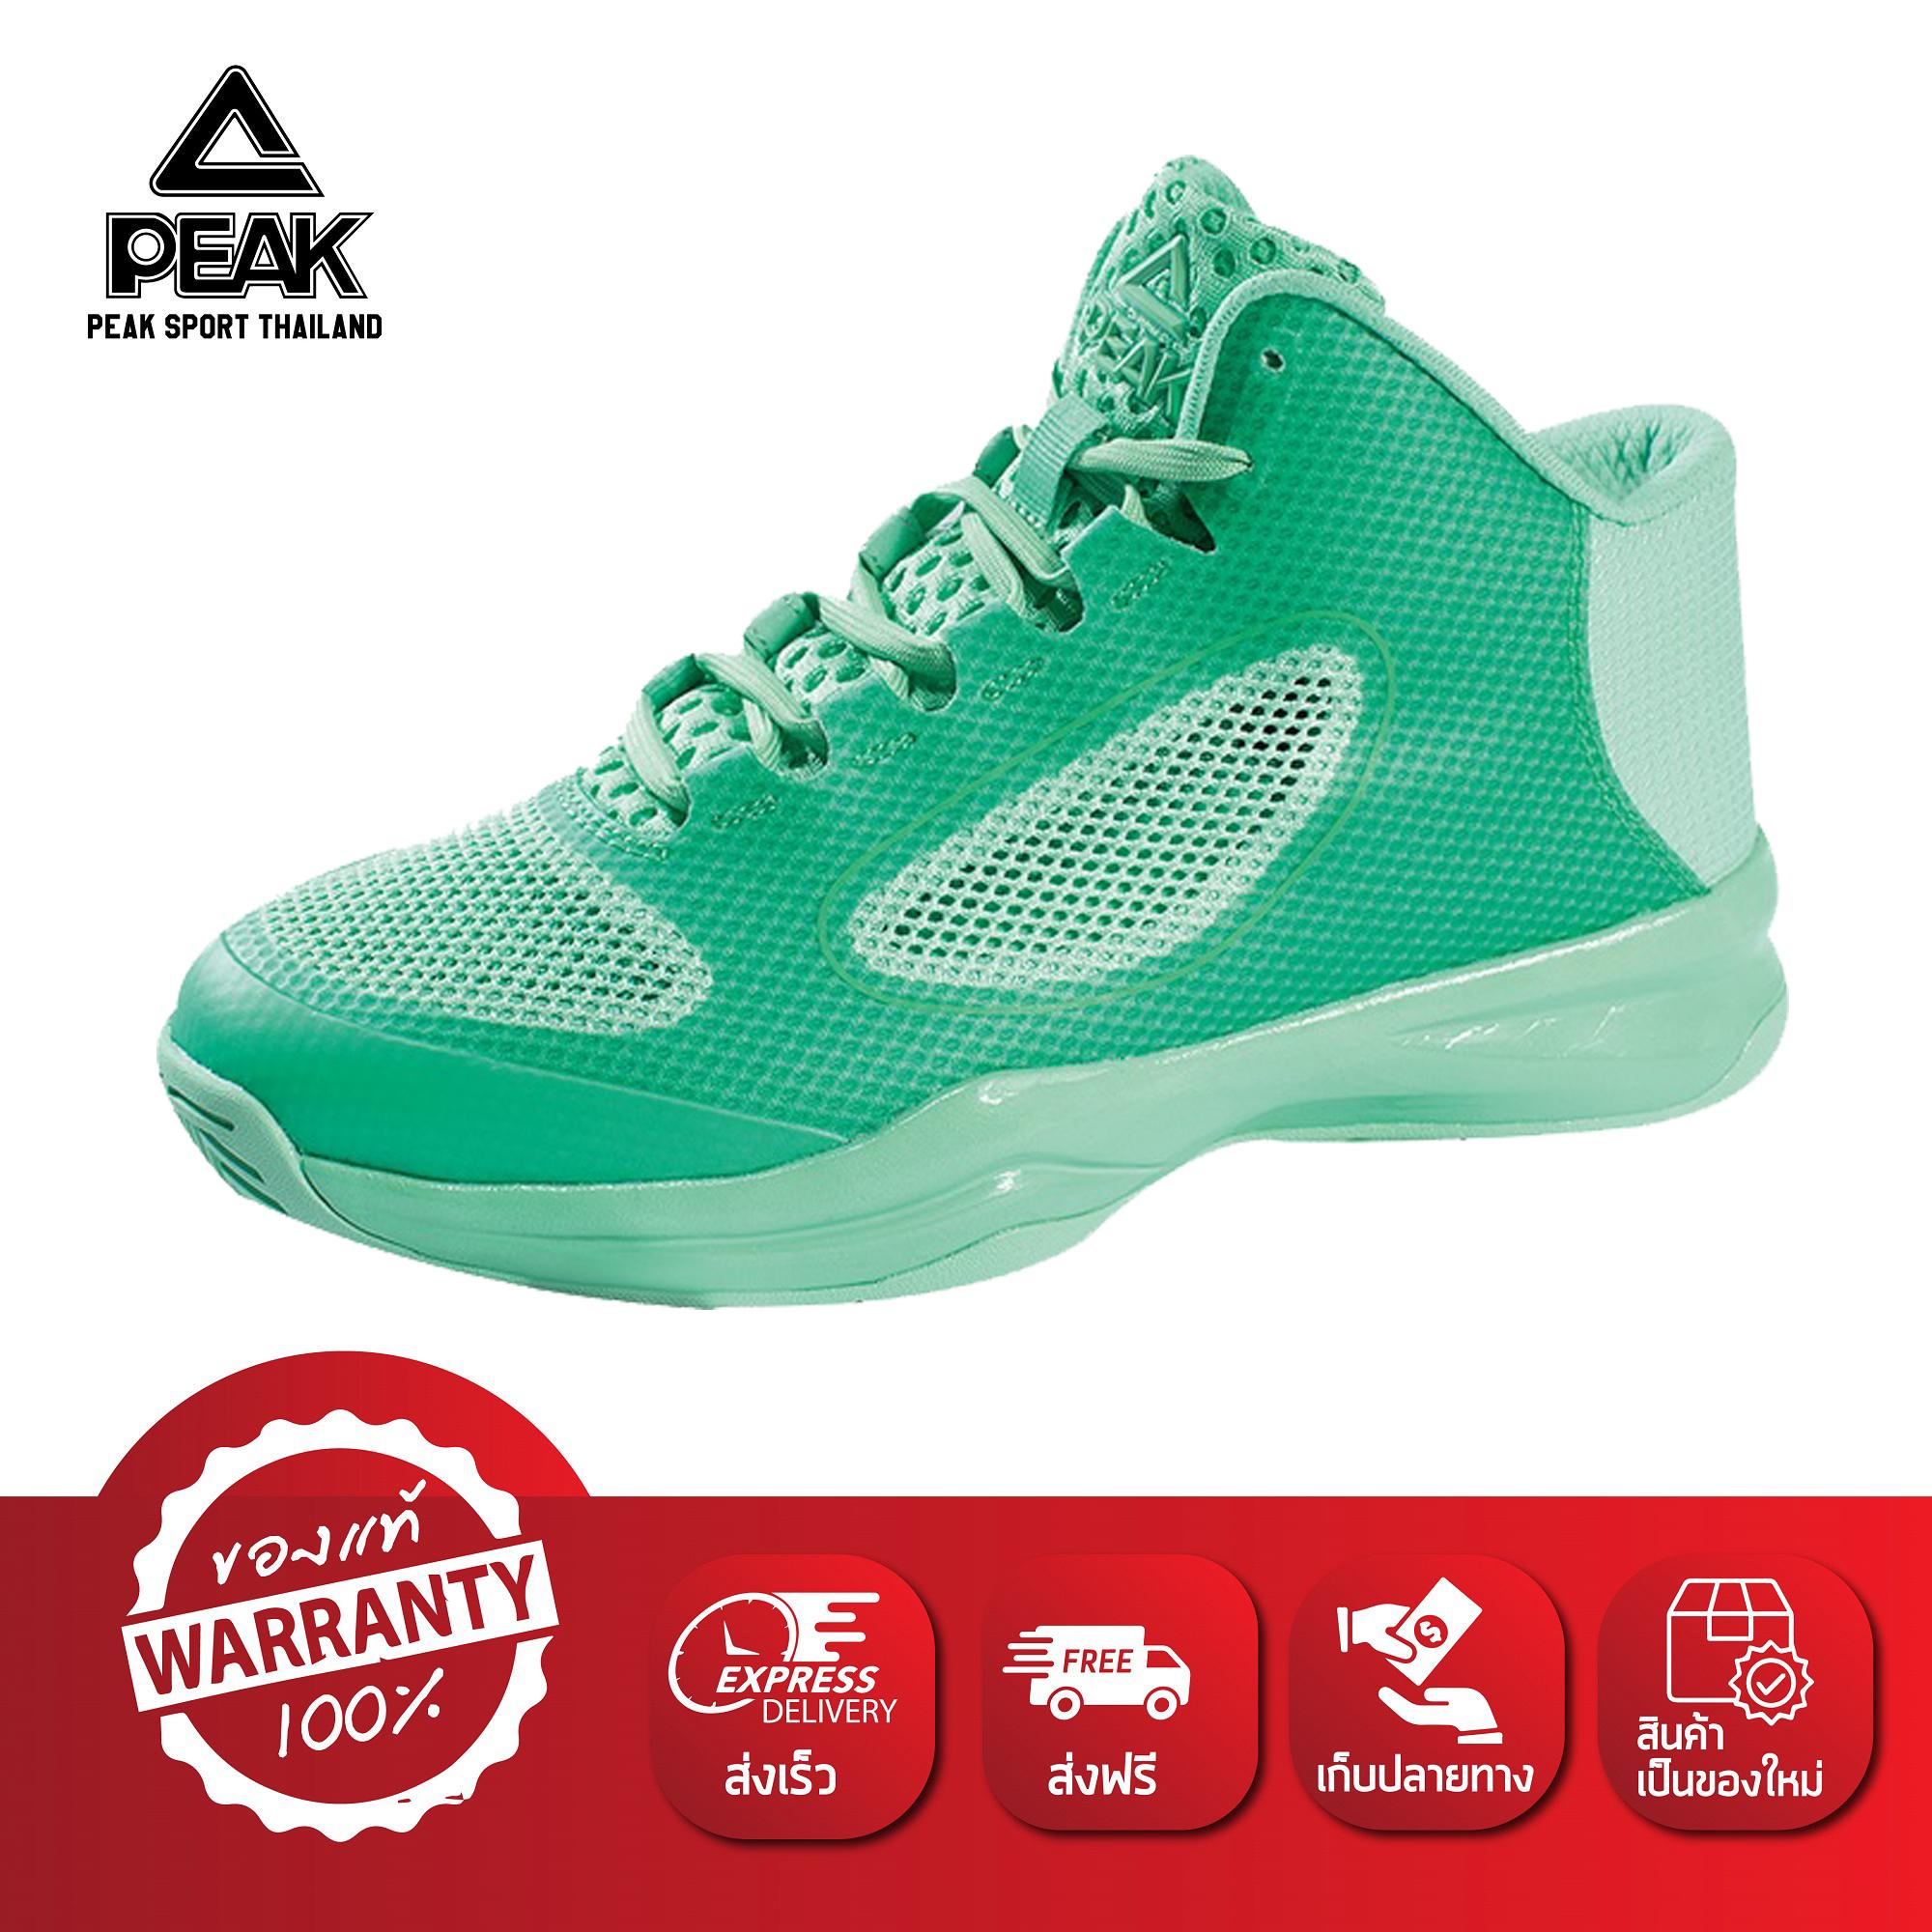 PEAK รองเท้า บาสเกตบอล Basketball shoes พีค Sneak รุ่น E82008A Green (มี 3สี ดำ,ส้ม,เขียว)